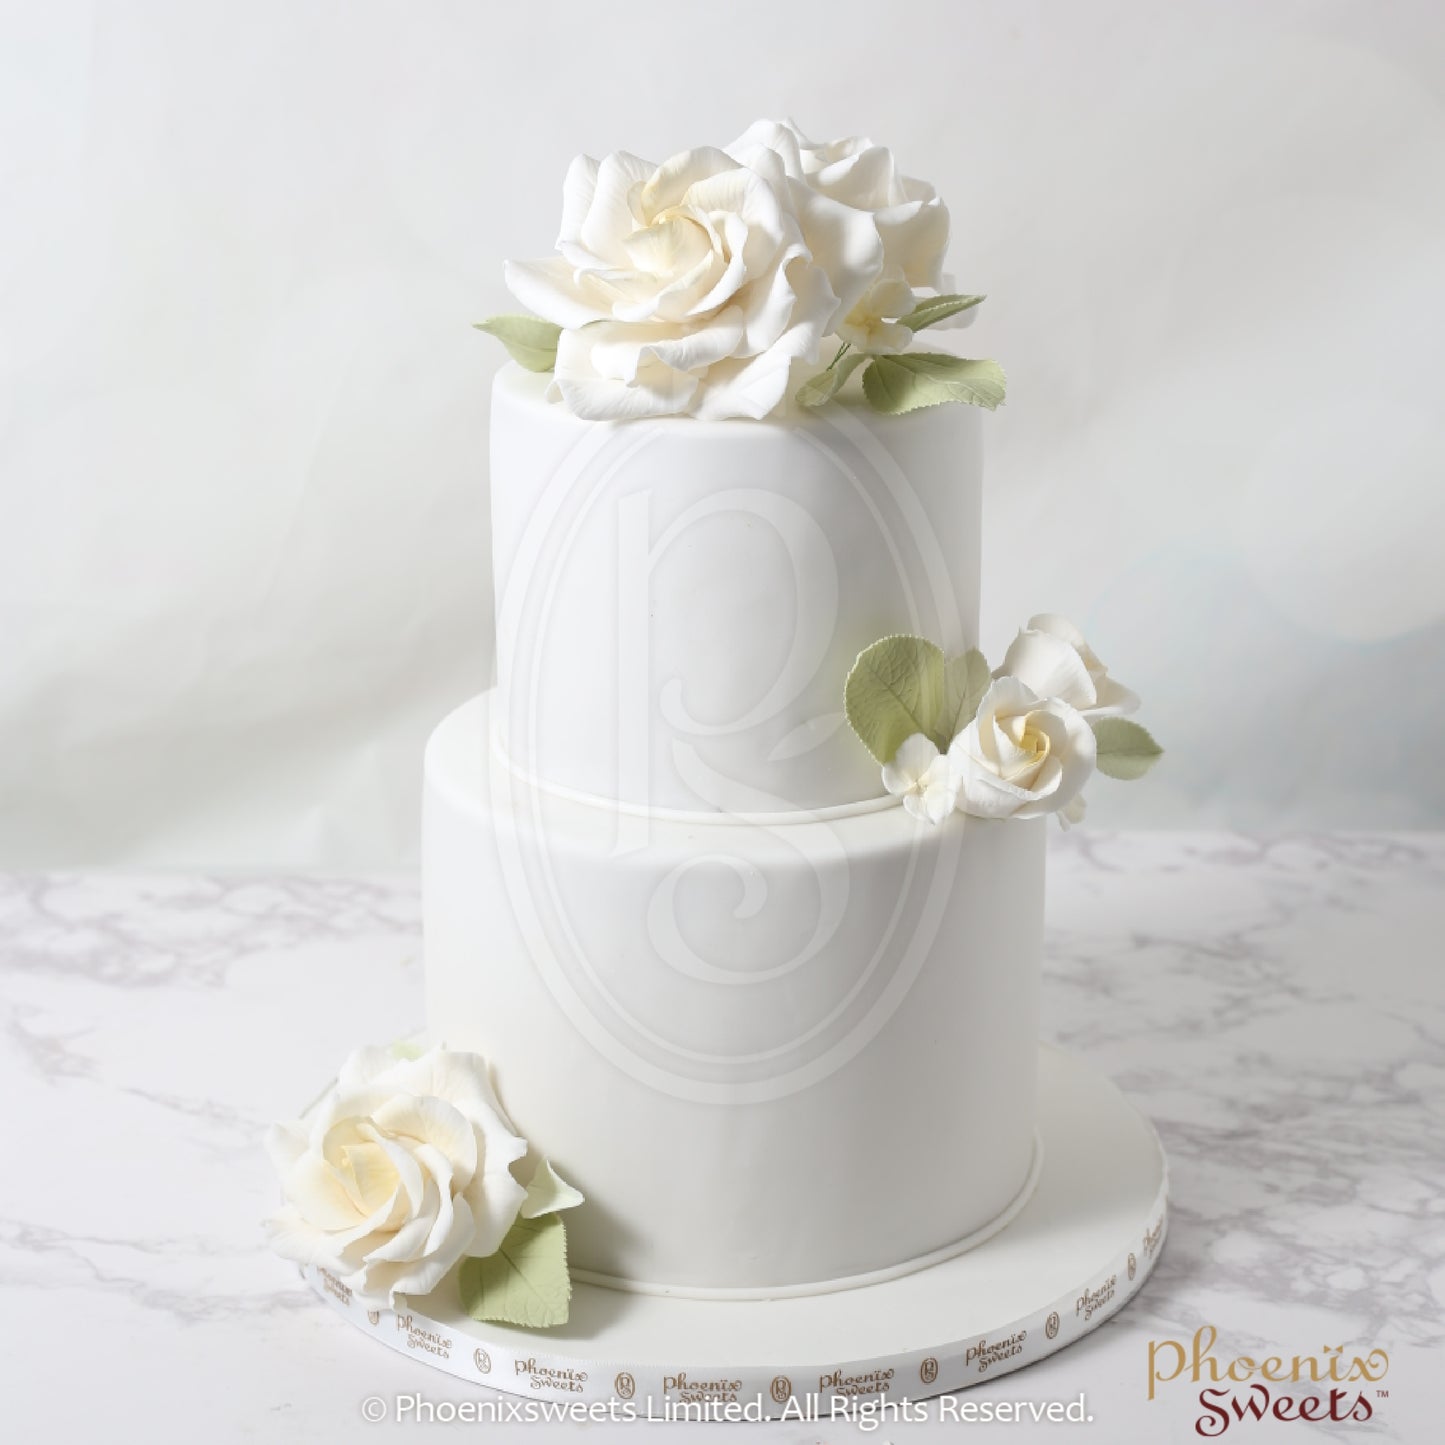 Fondant Cake - White Roses Cake